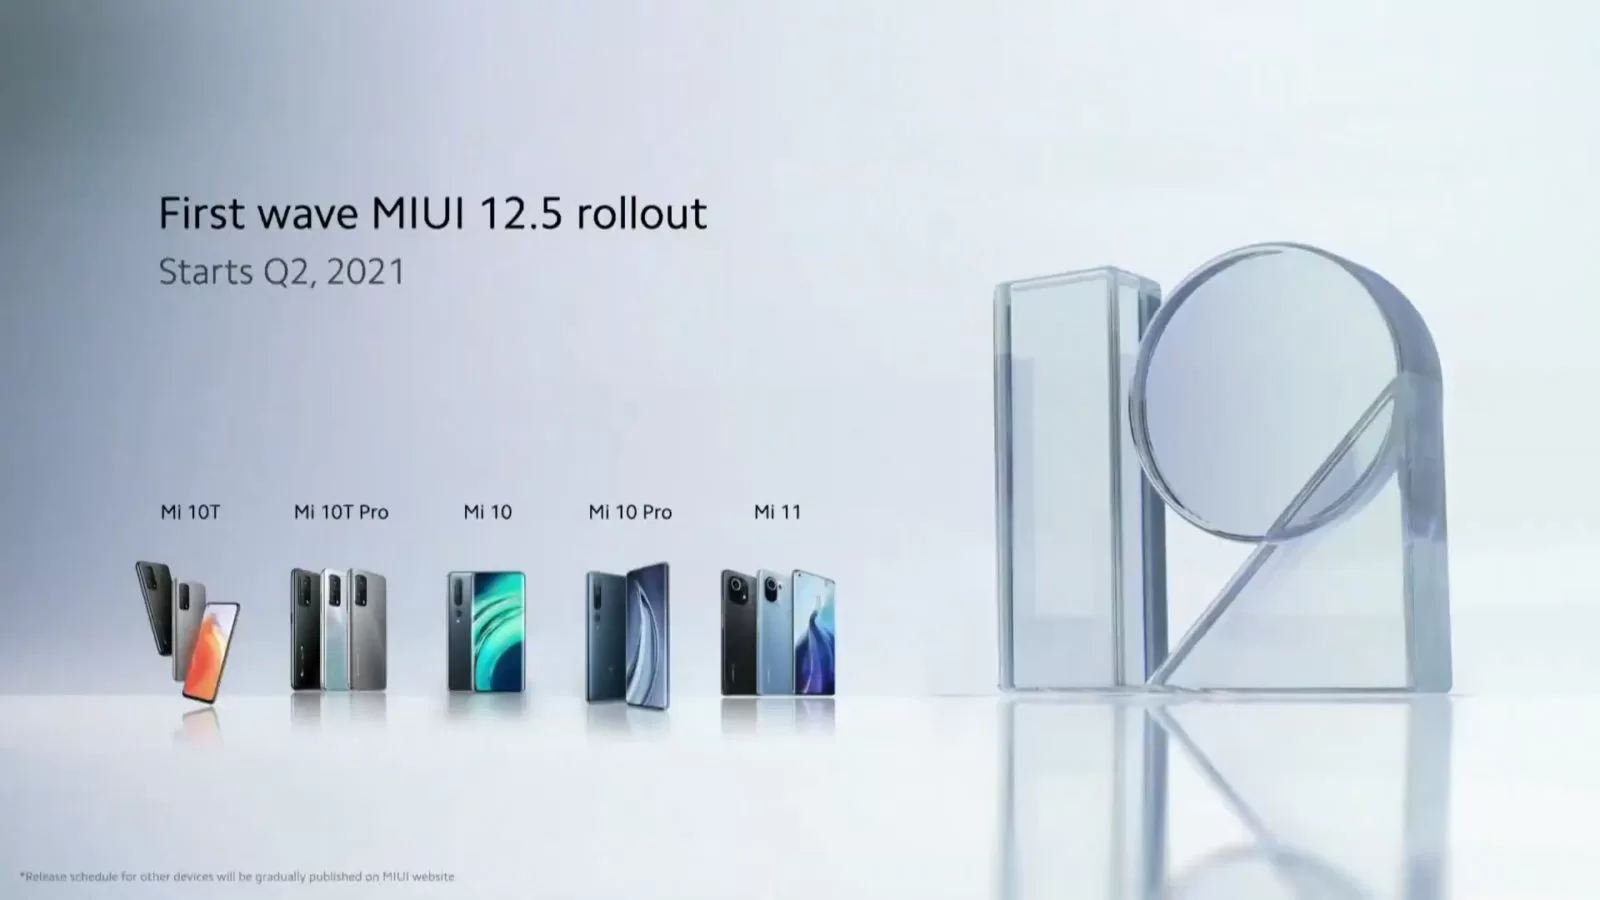 Xiaomi MIUI 12.5 rollout | MIUI 12.5 | ข่าวดี MIUI 12.5 จะให้ผู้ใช้งานลบแอปที่ติดมากับเครื่องได้แล้ว